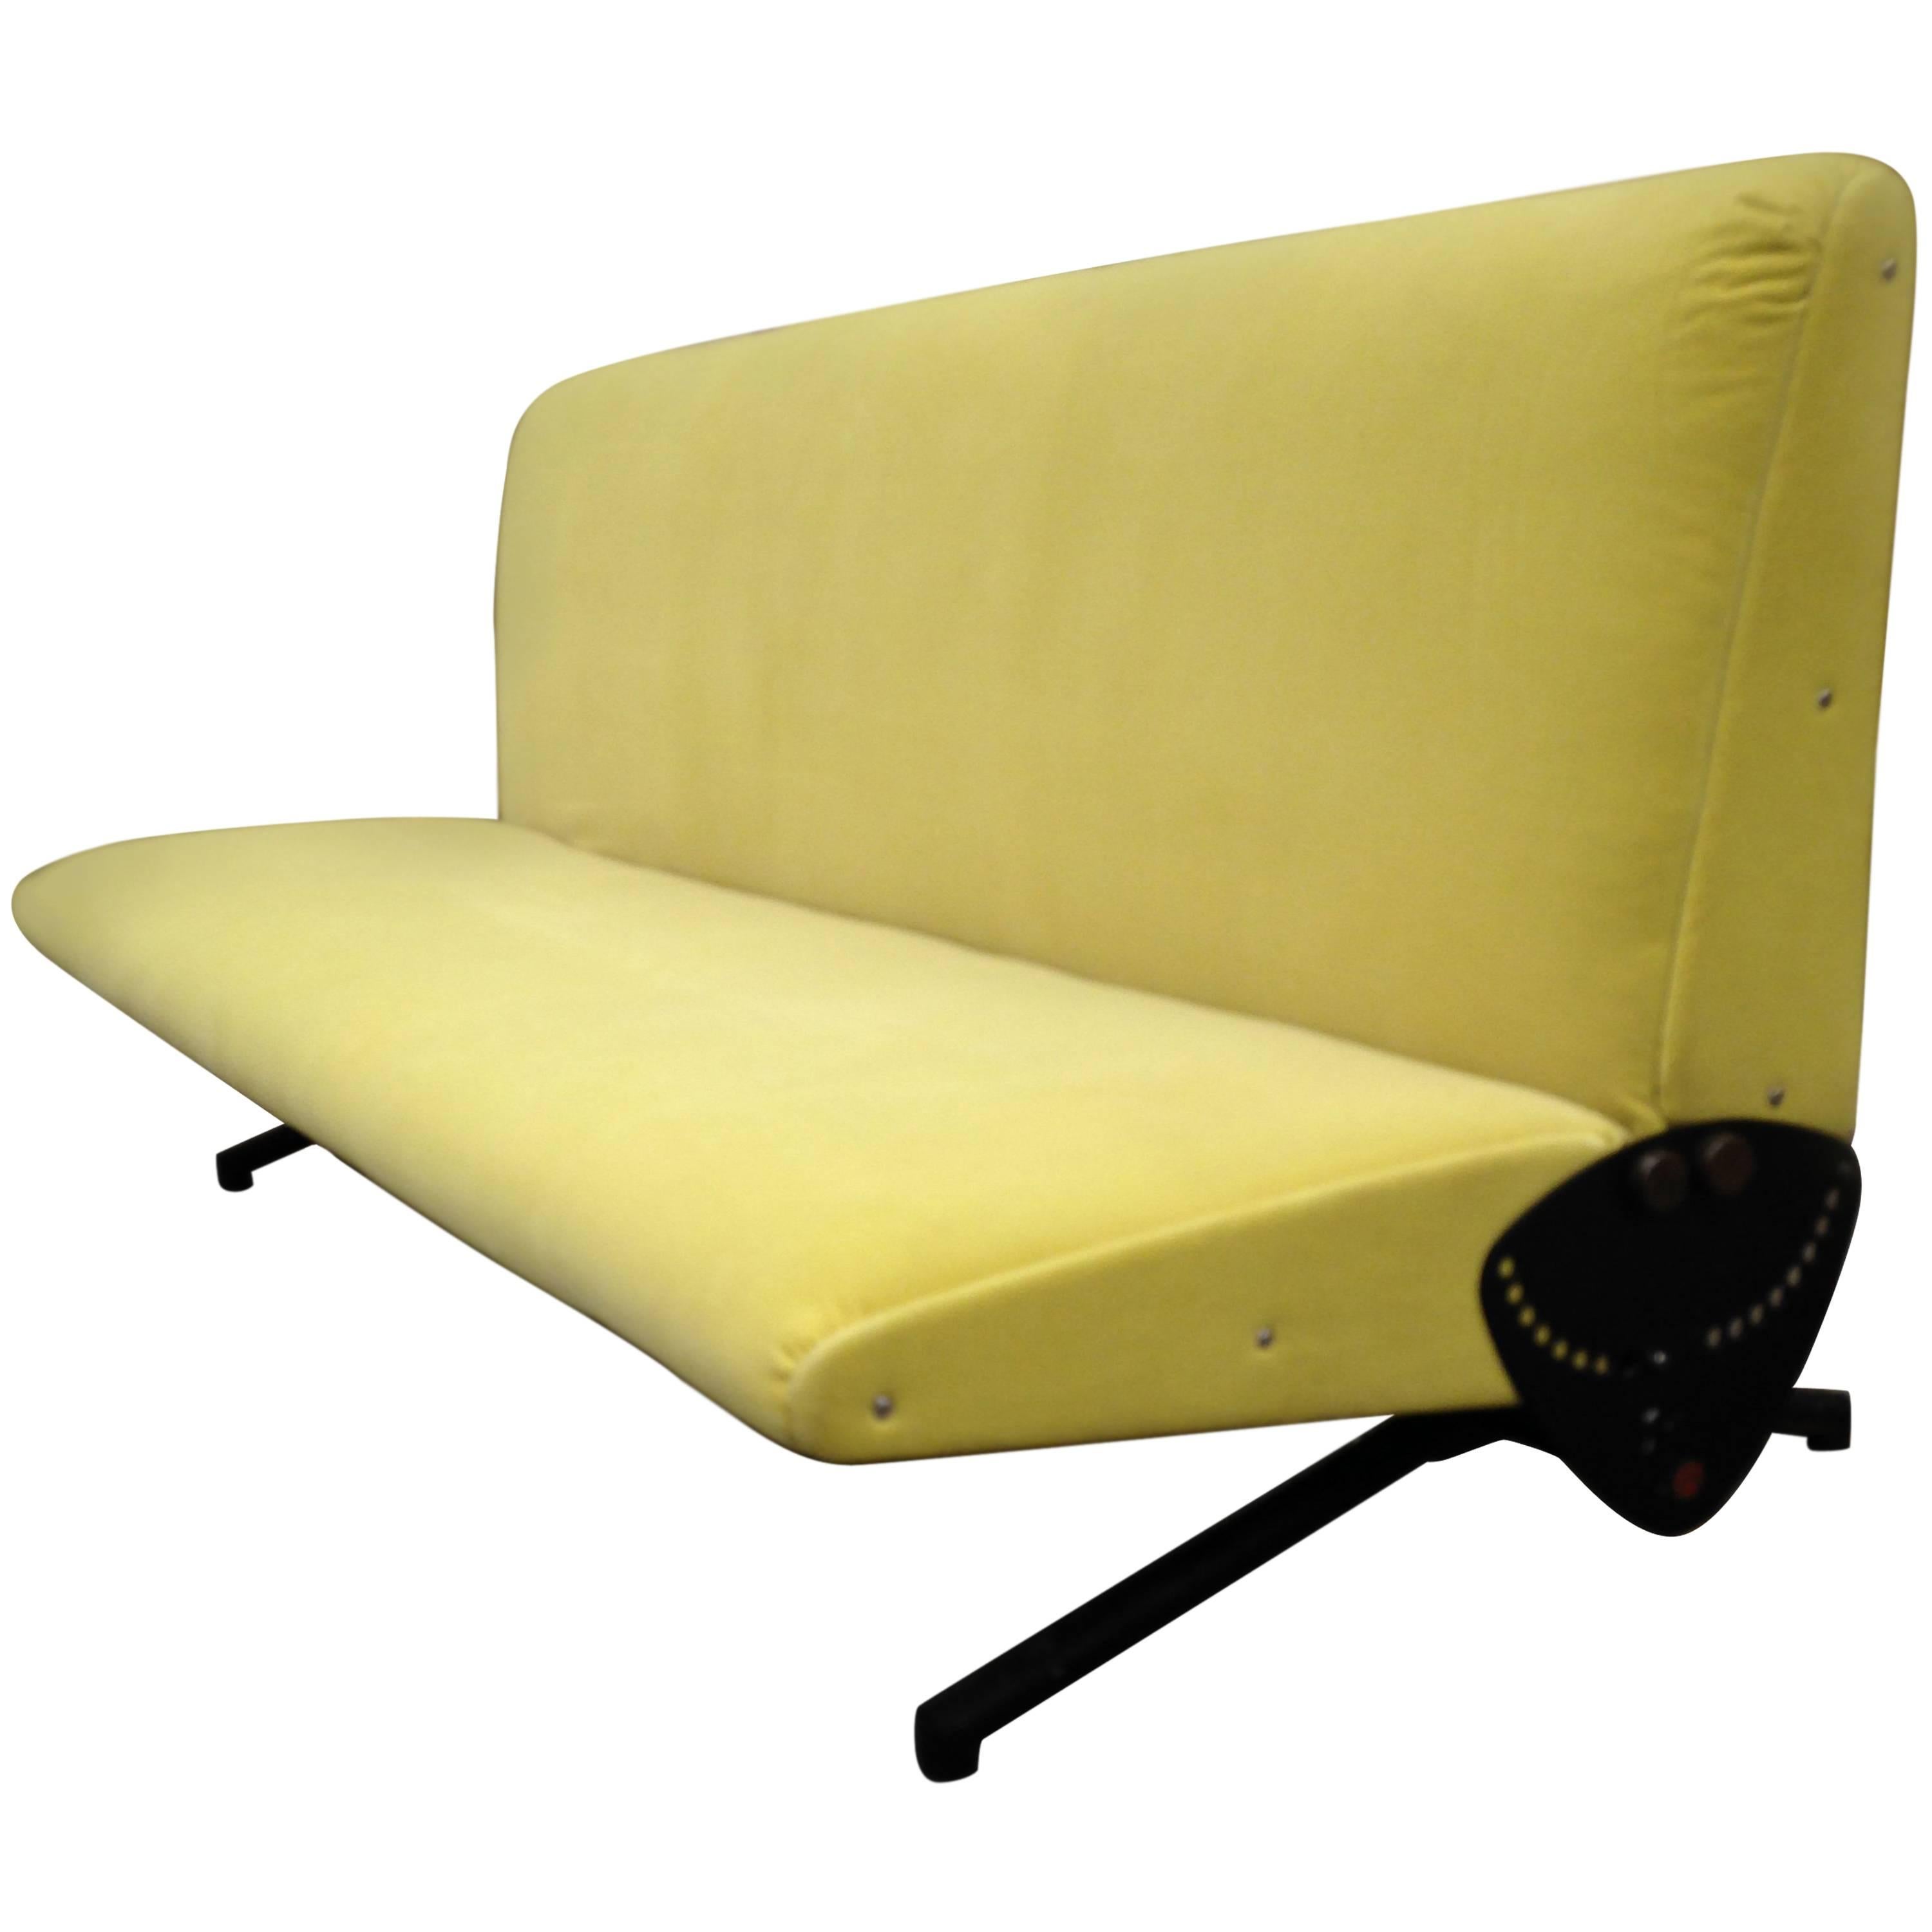 Italian Midcentury D 70 Sofa / Bed by Osvaldo Borsani for Tecno, New Upholstery